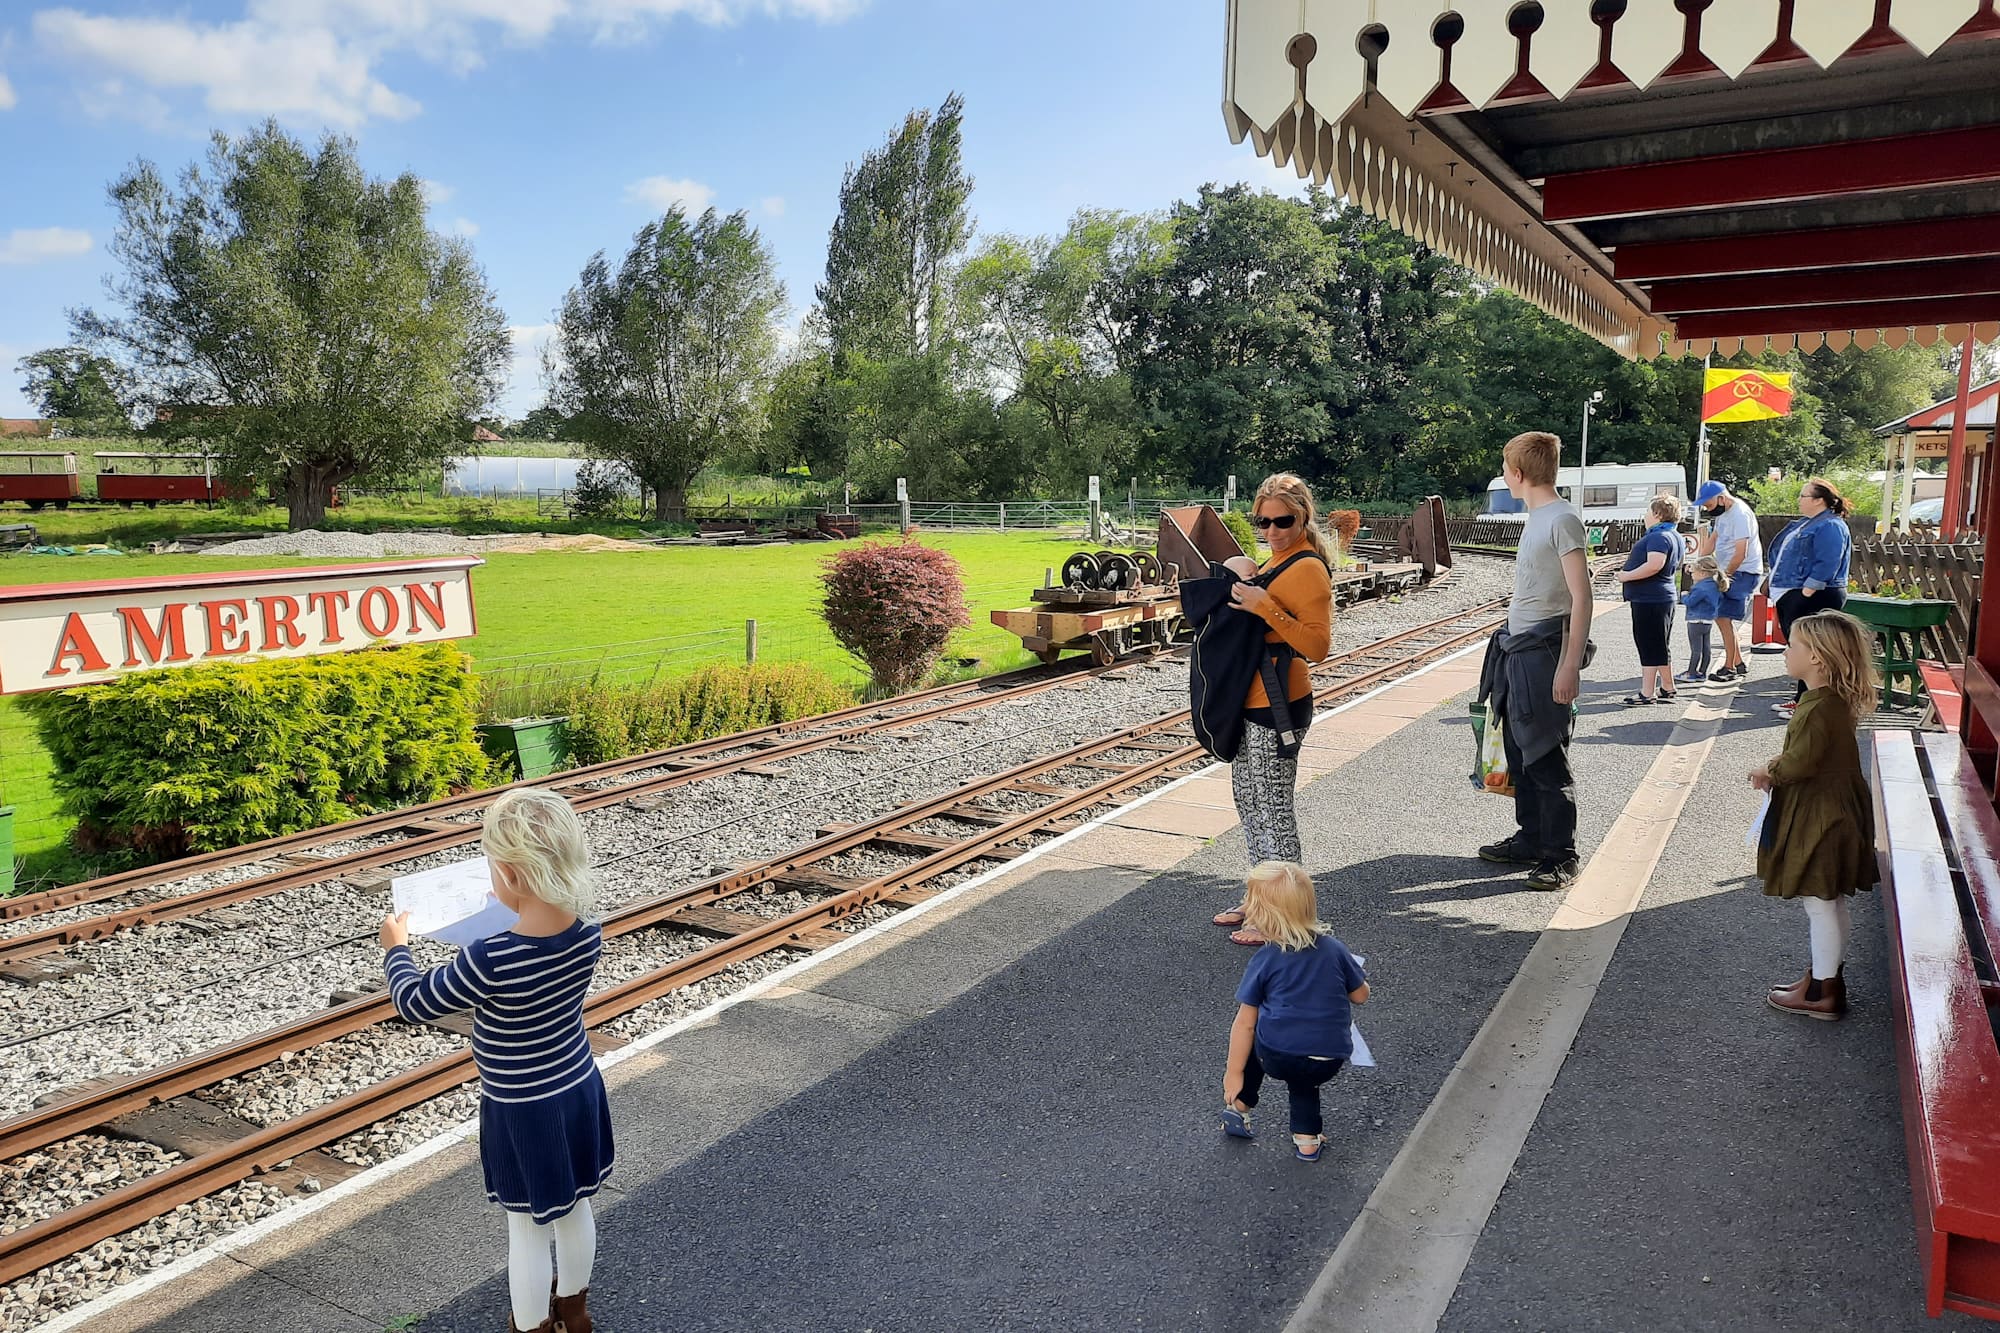 Amerton railway